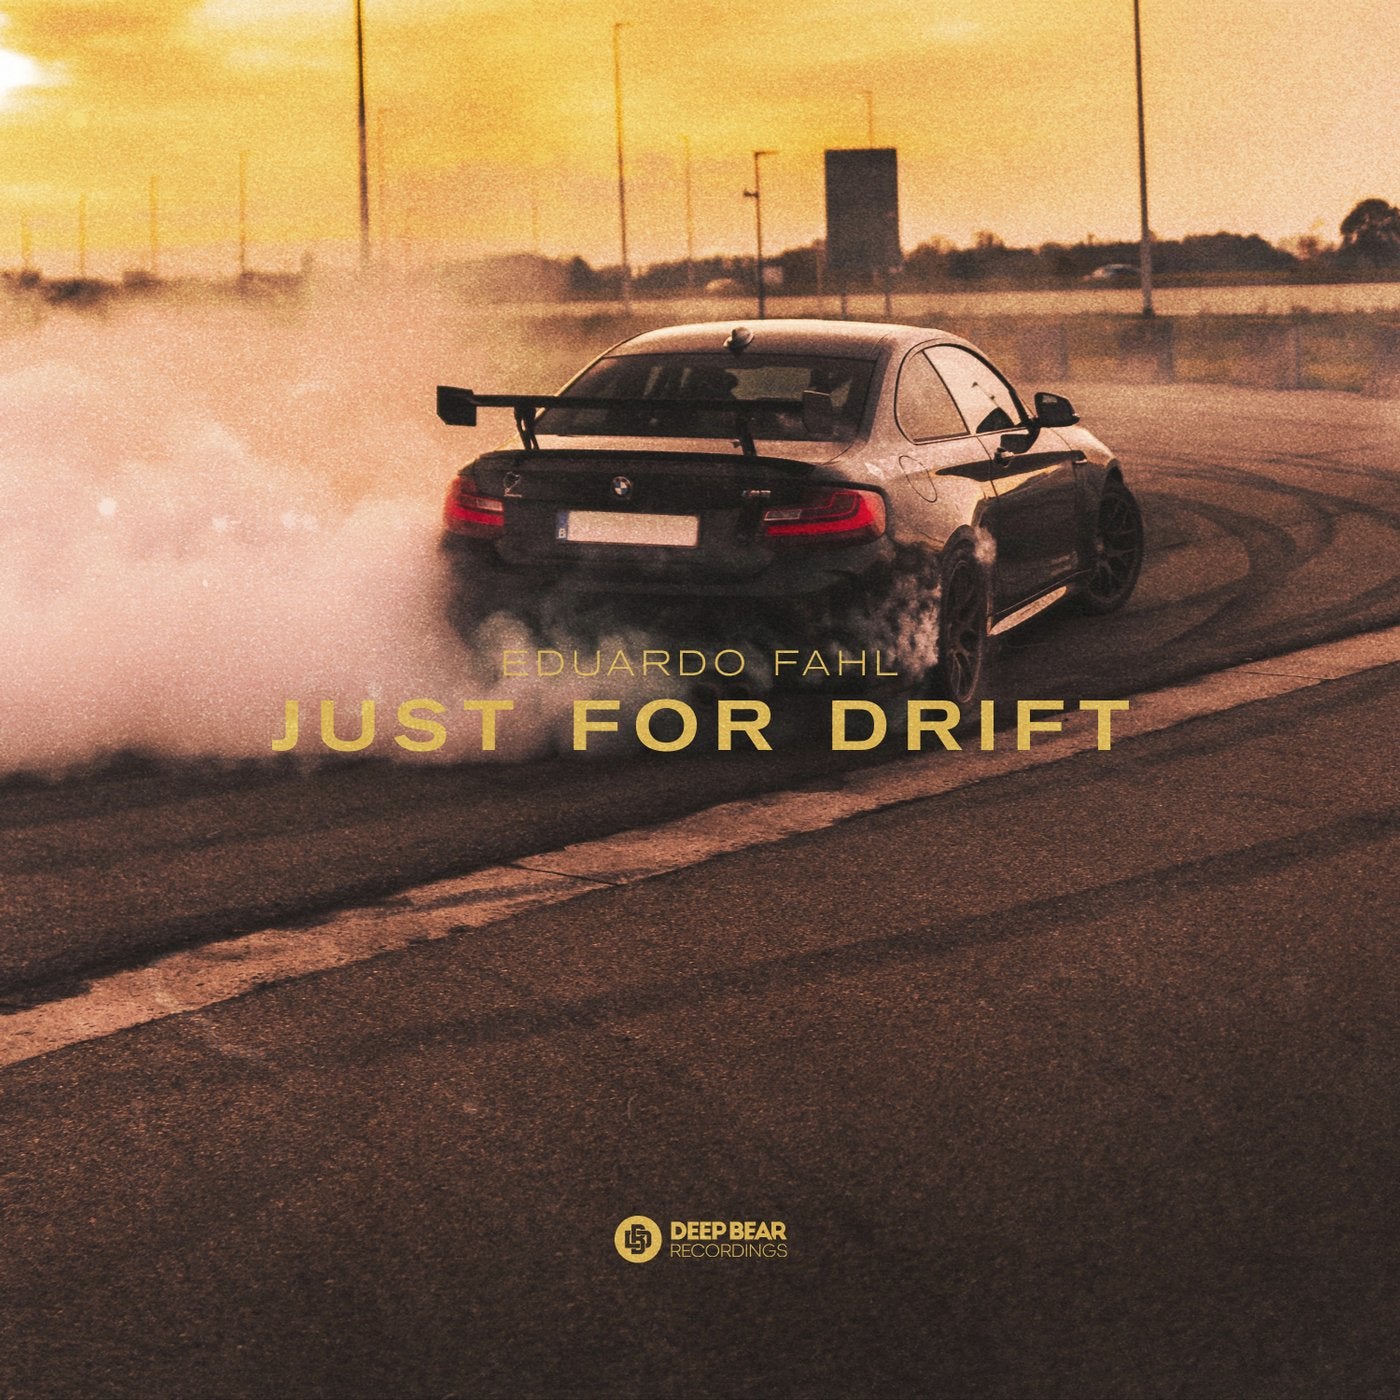 Just for Drift